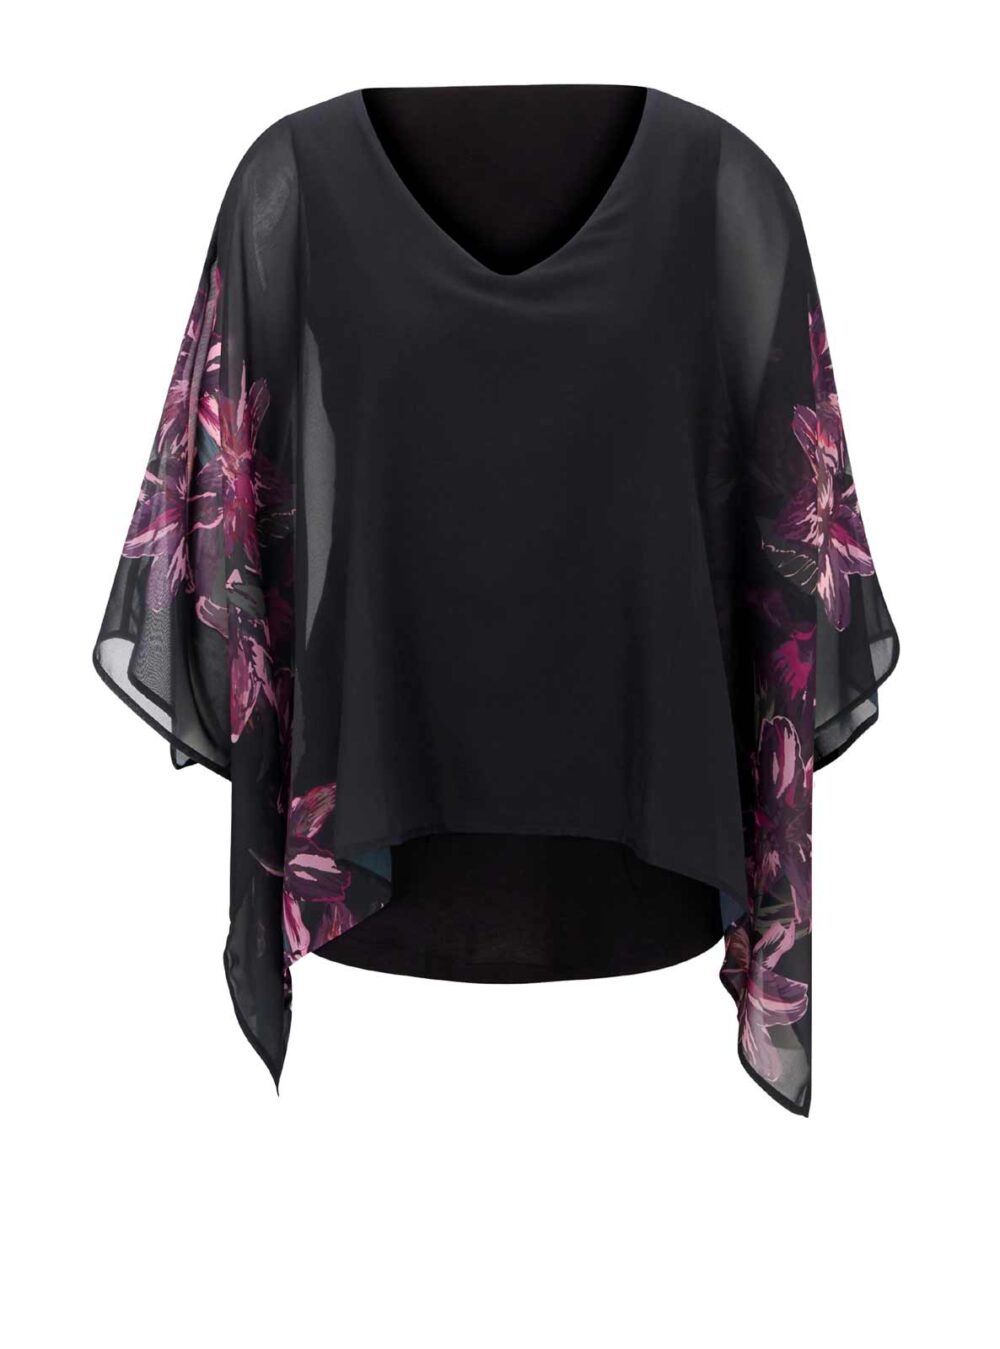 Damen Bluse Tunika Shirt mit Top Sommer schwarz gemustert PATRIZIA DINI Missforty